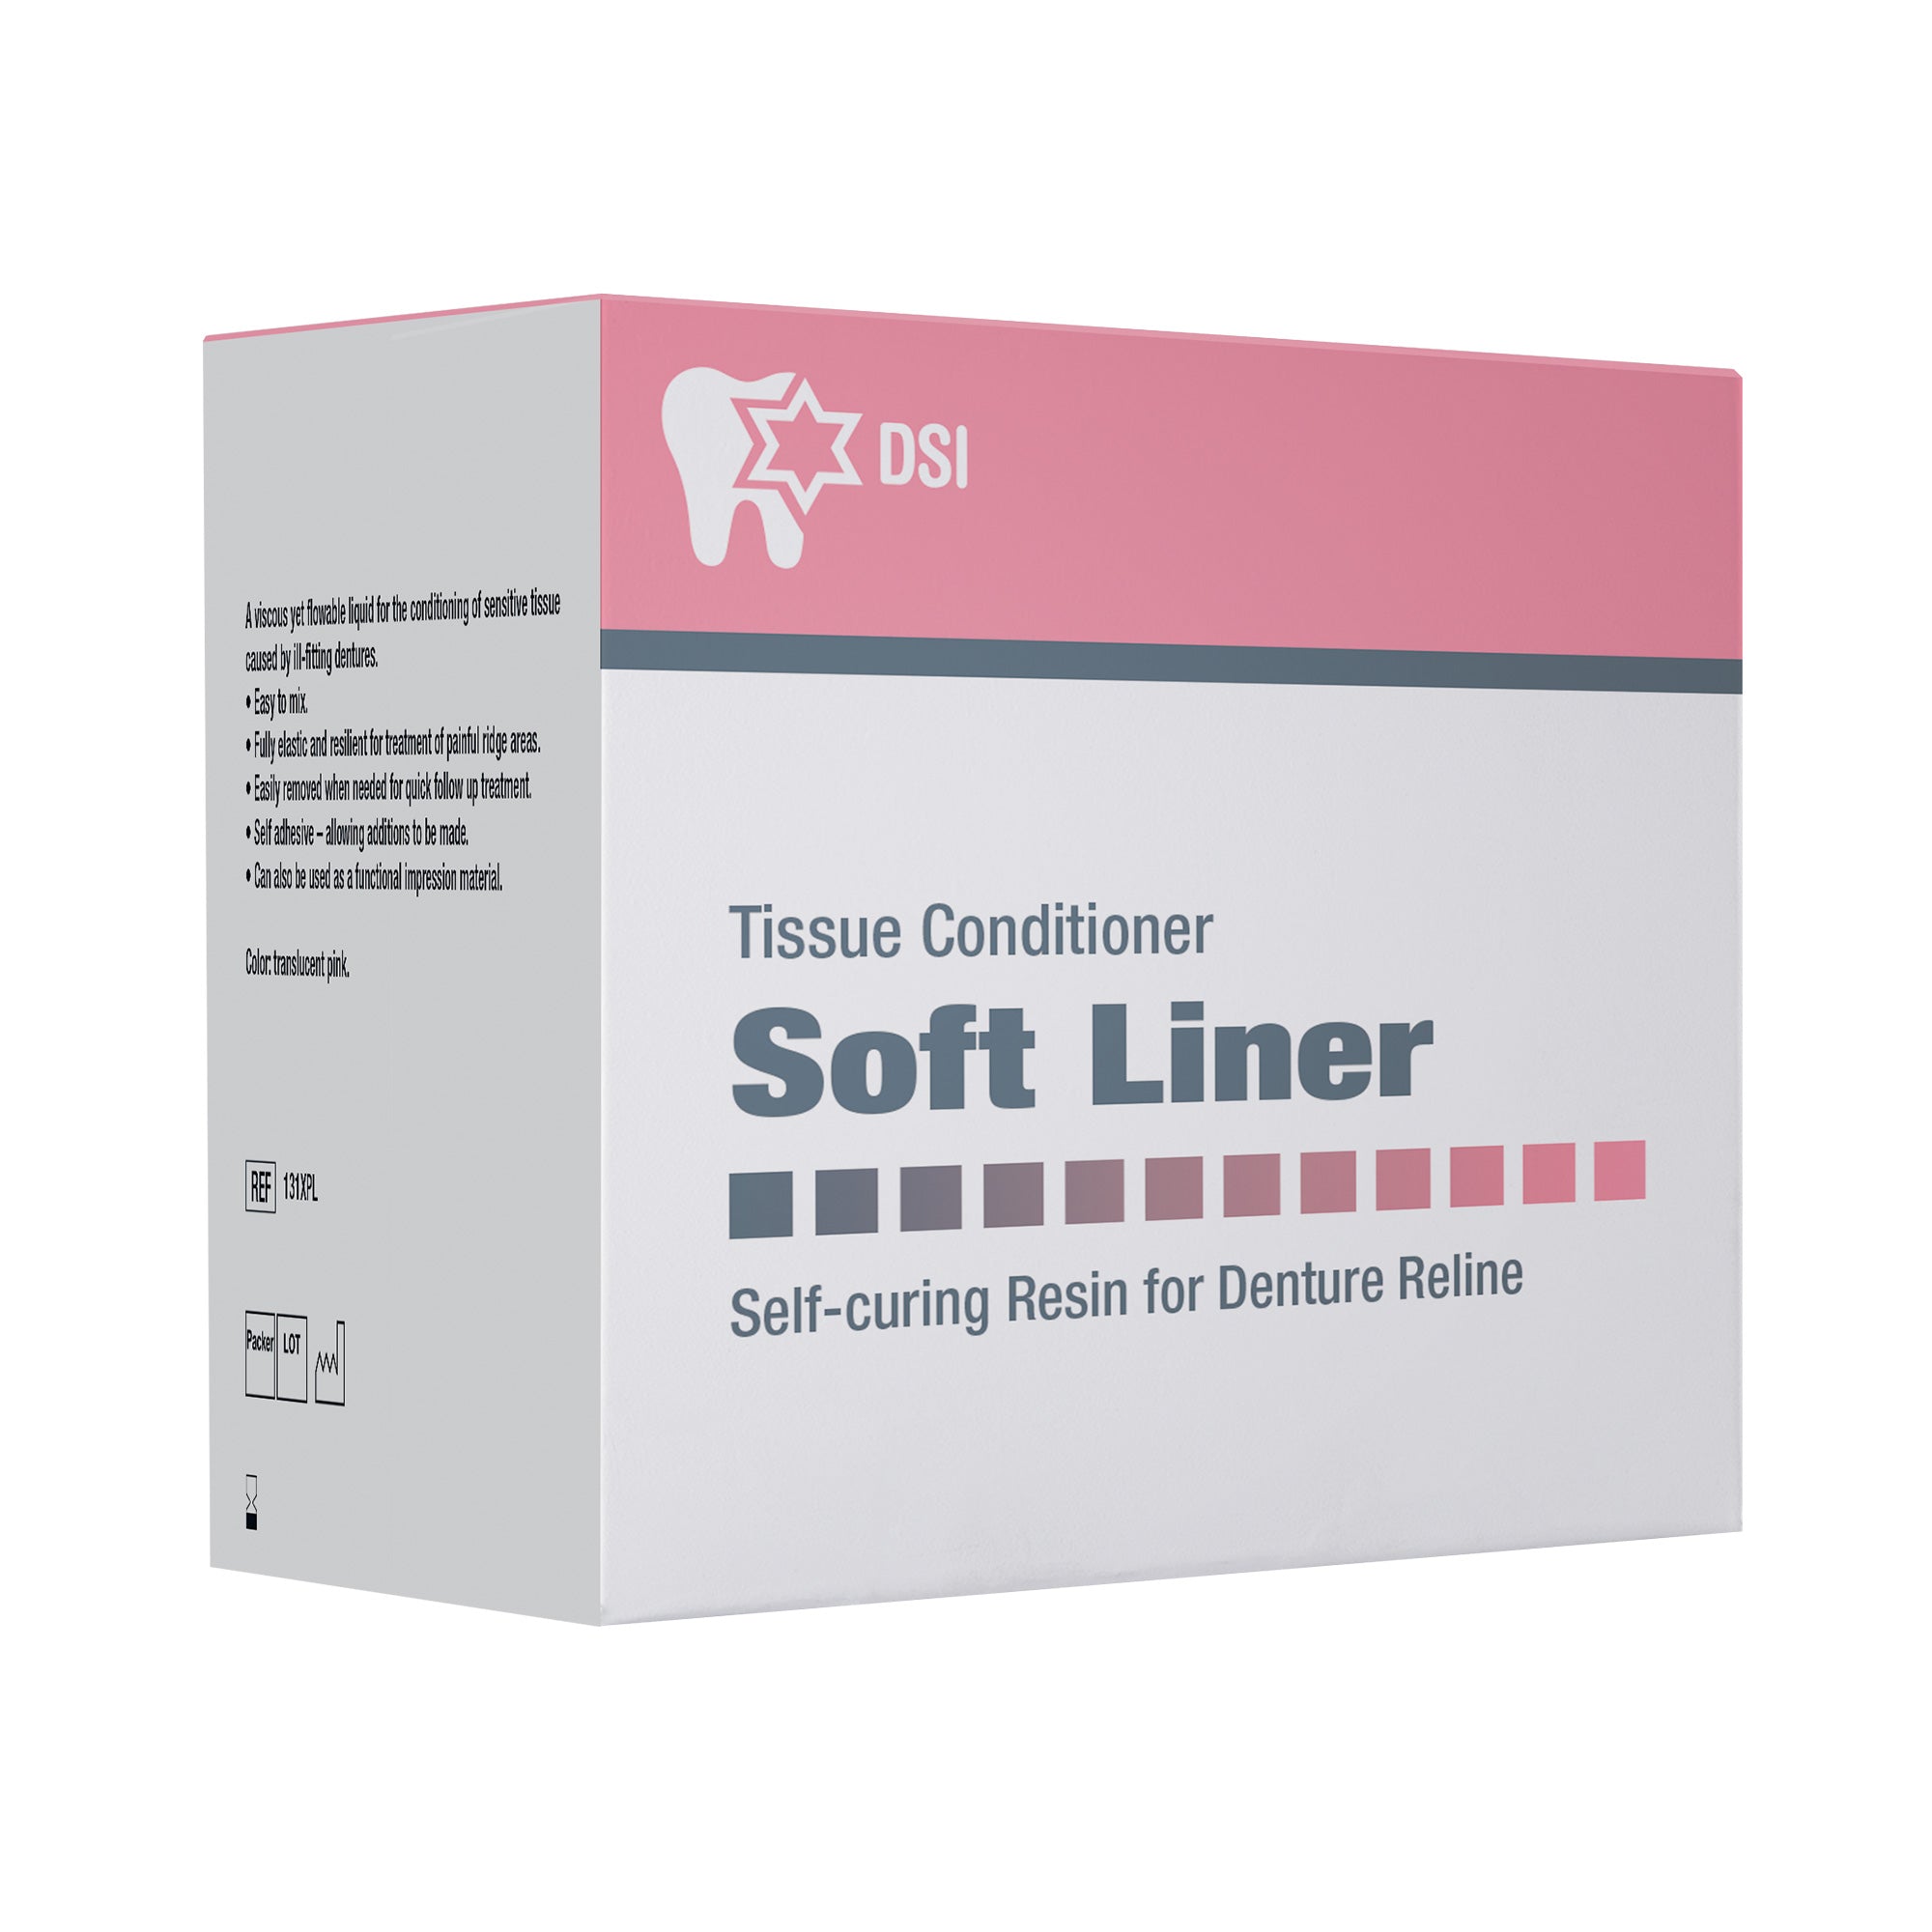 DSI Soft Liner Resin For Dentures Tissue Conditioner 2x50g + 100ml